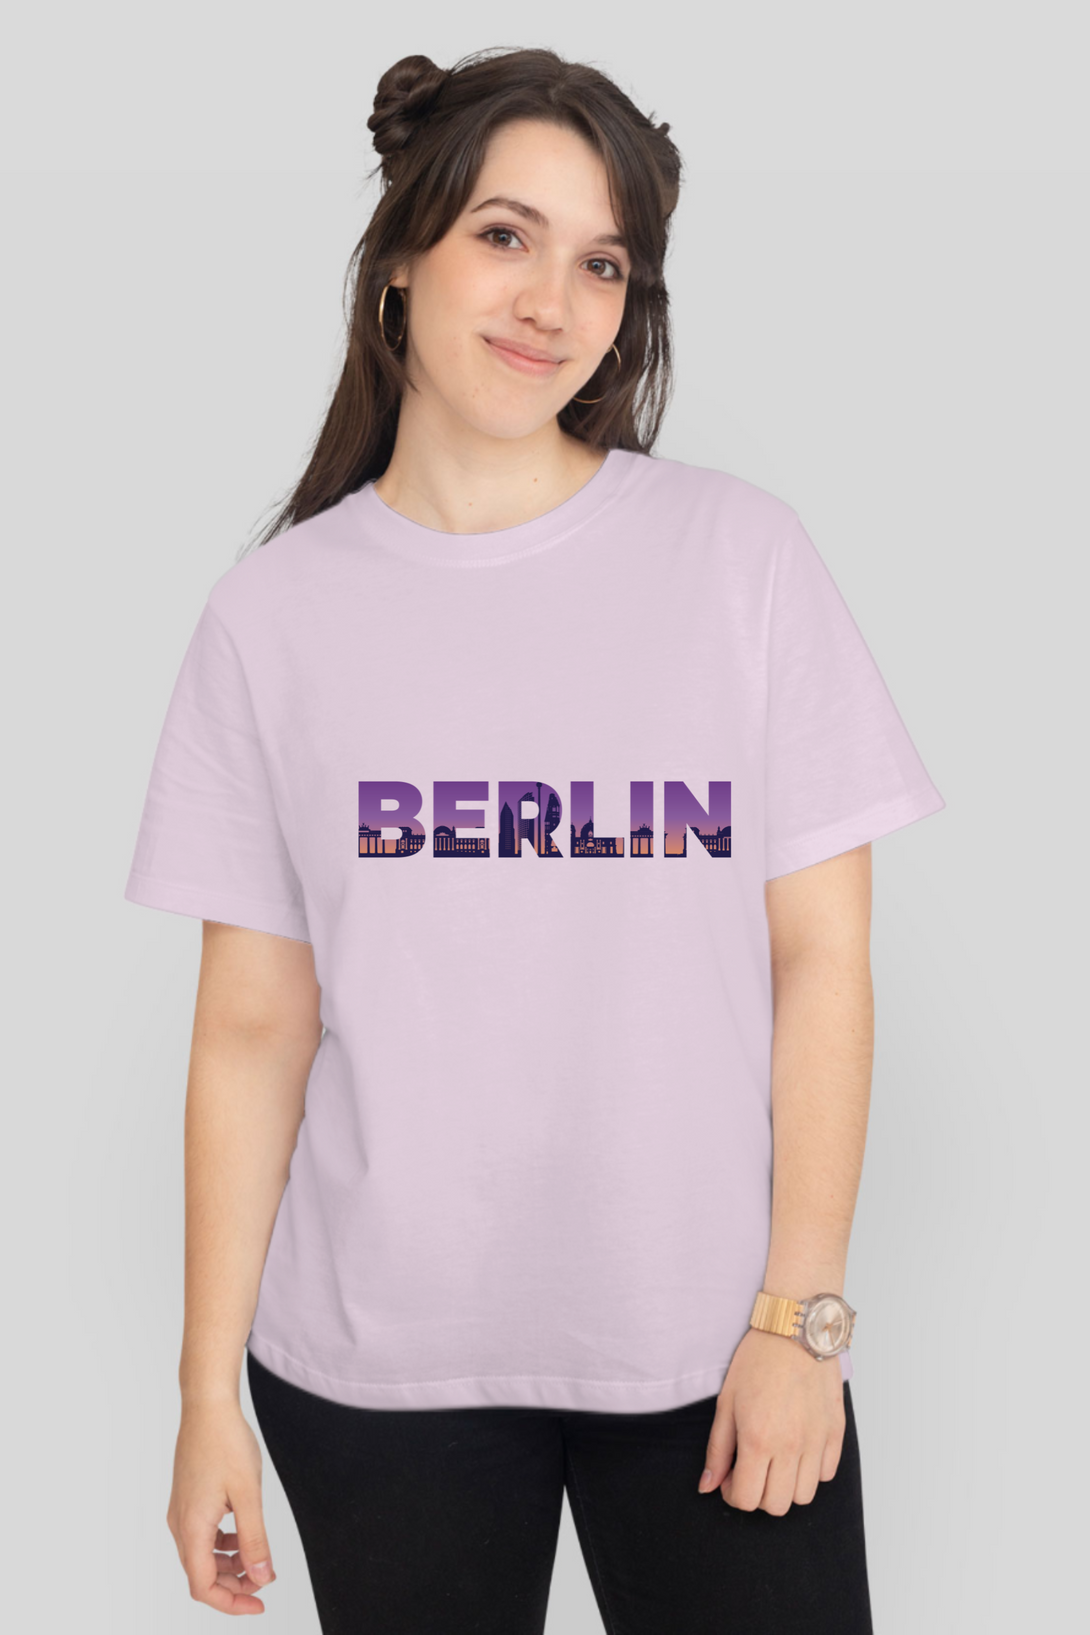 Berlin Skyline Printed T-Shirt For Women - WowWaves - 13